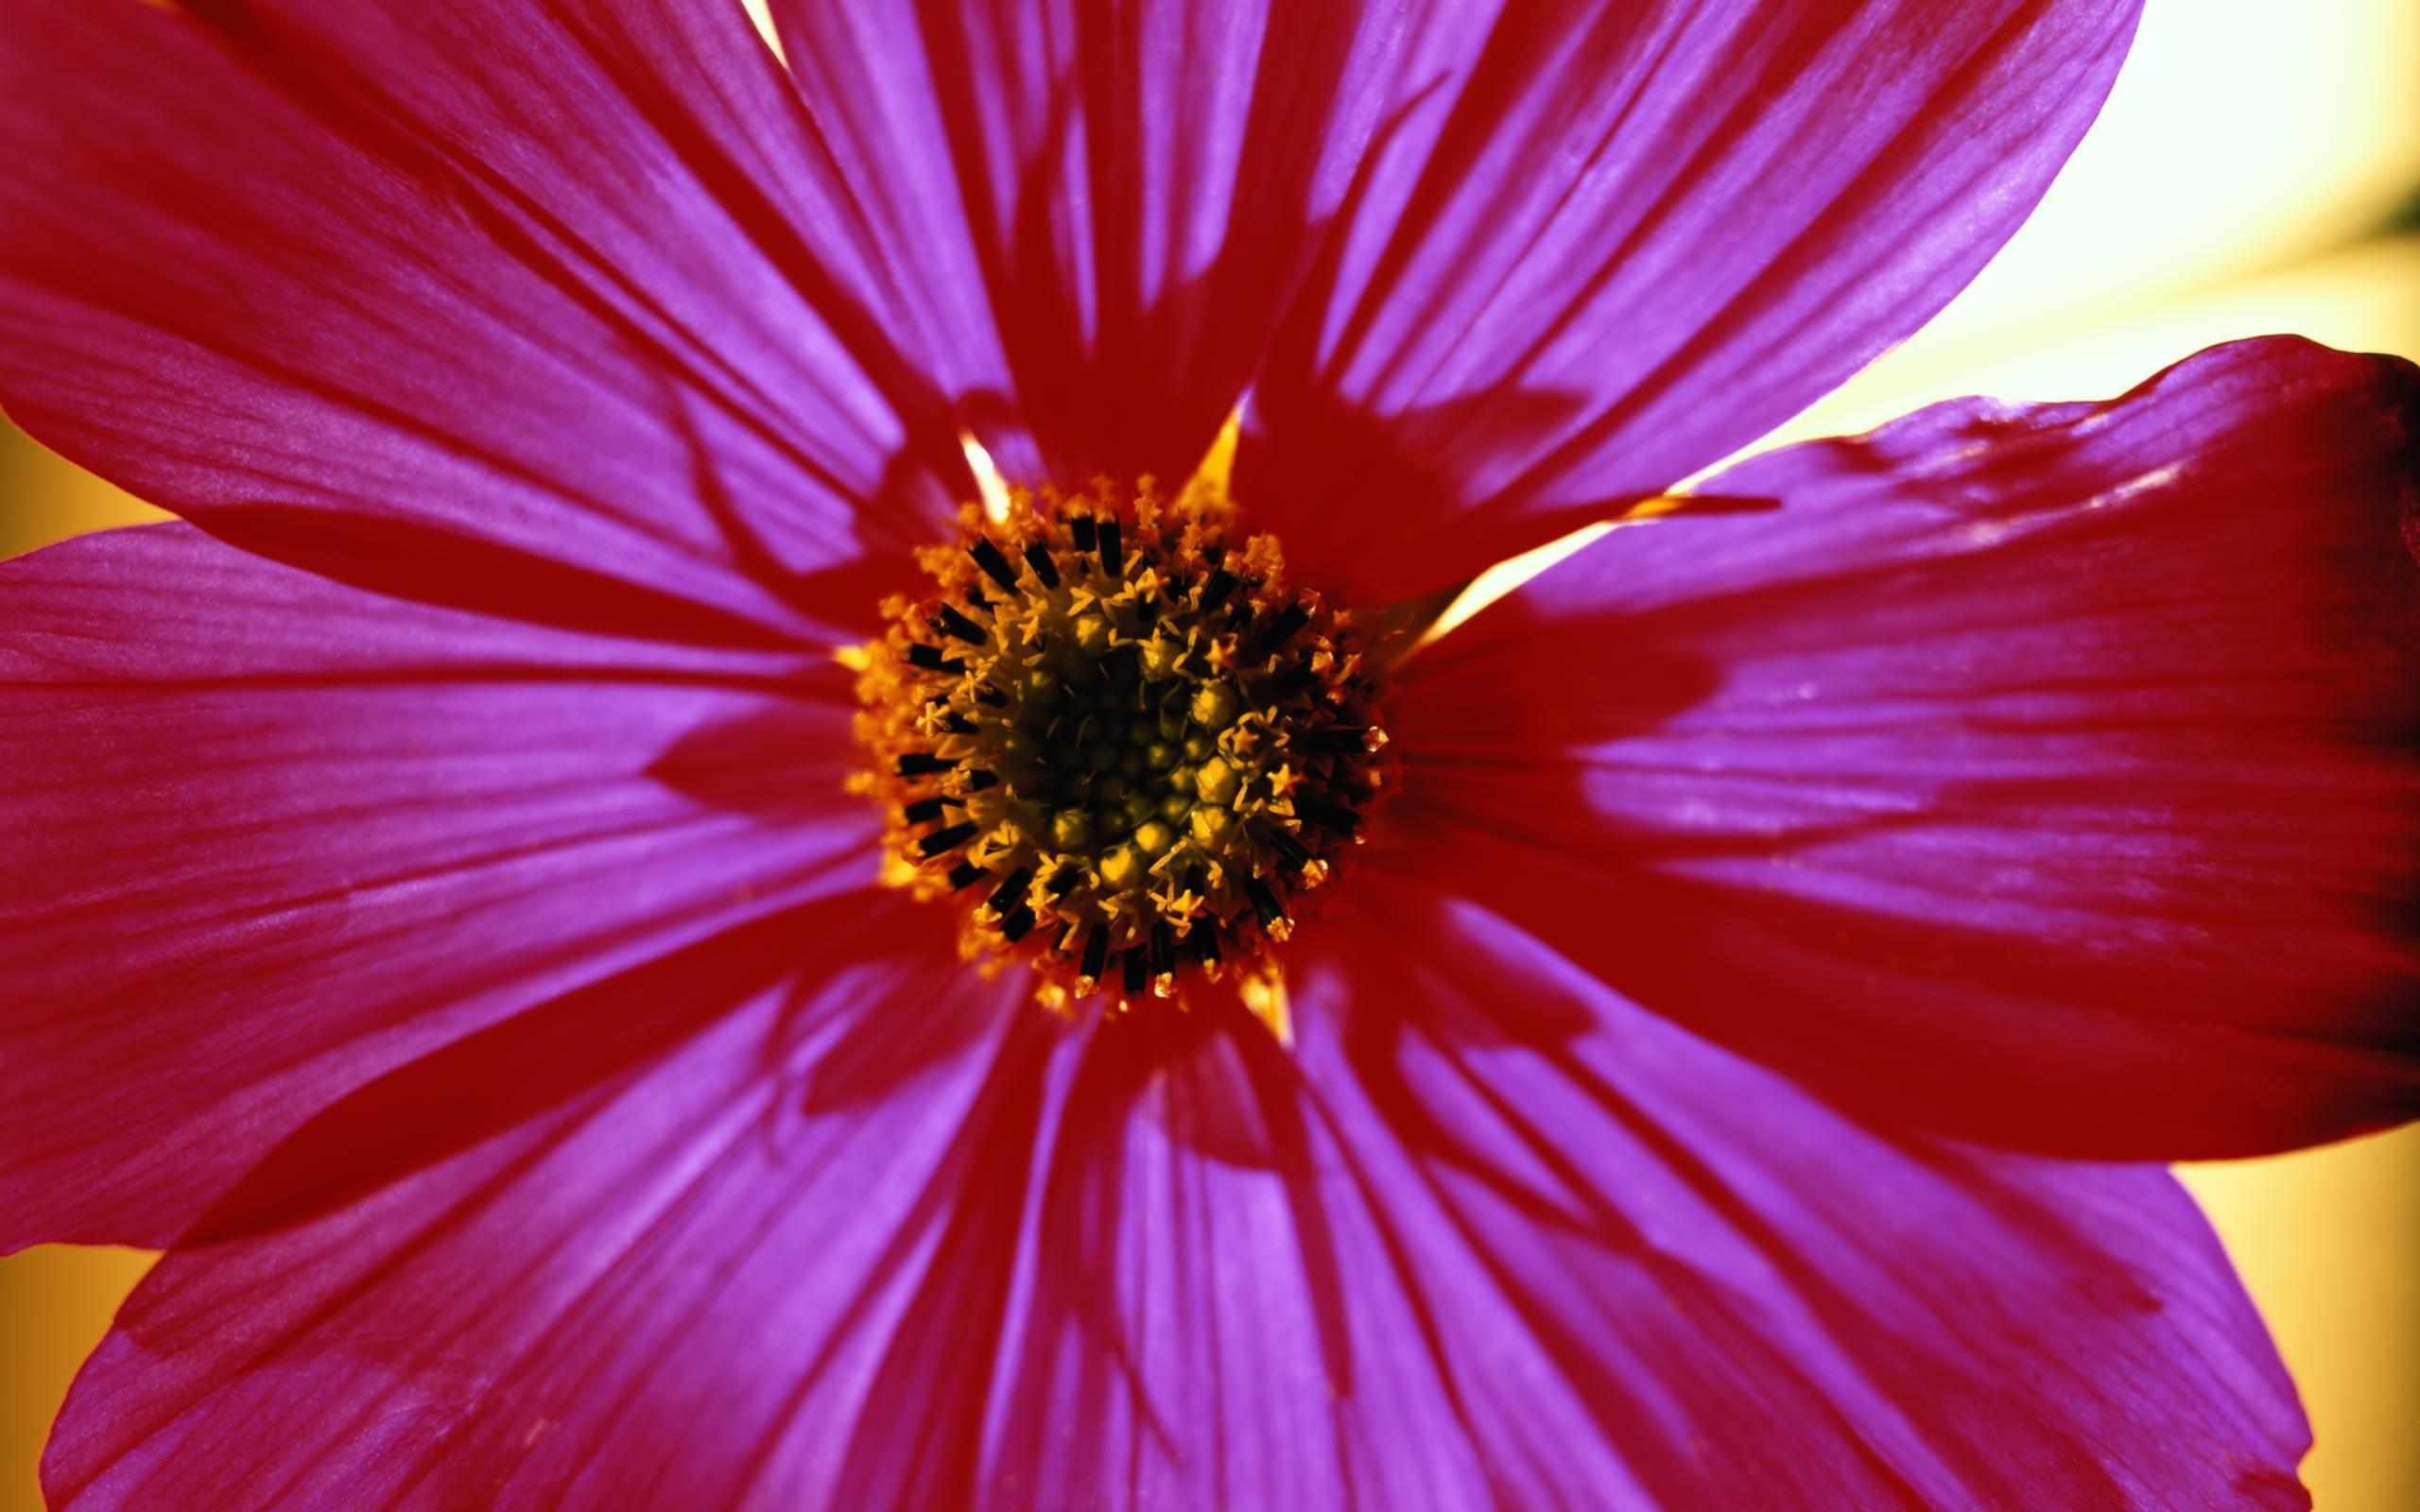 Desktop Wallpaper · Gallery · Nature · Pink daisy flower. Free